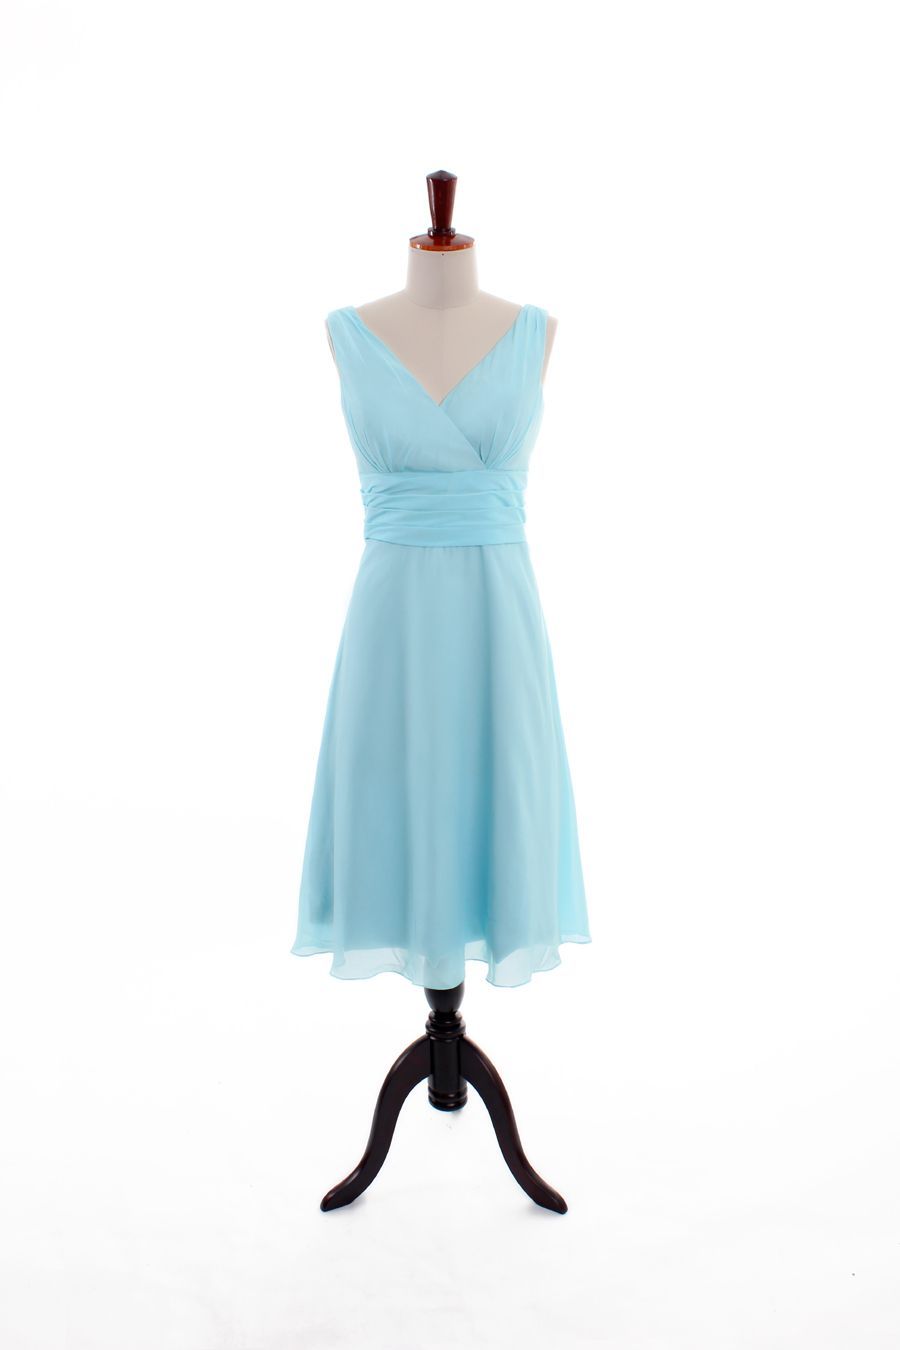 V-neck A-line with ruffle embellishment bridesmaid dress